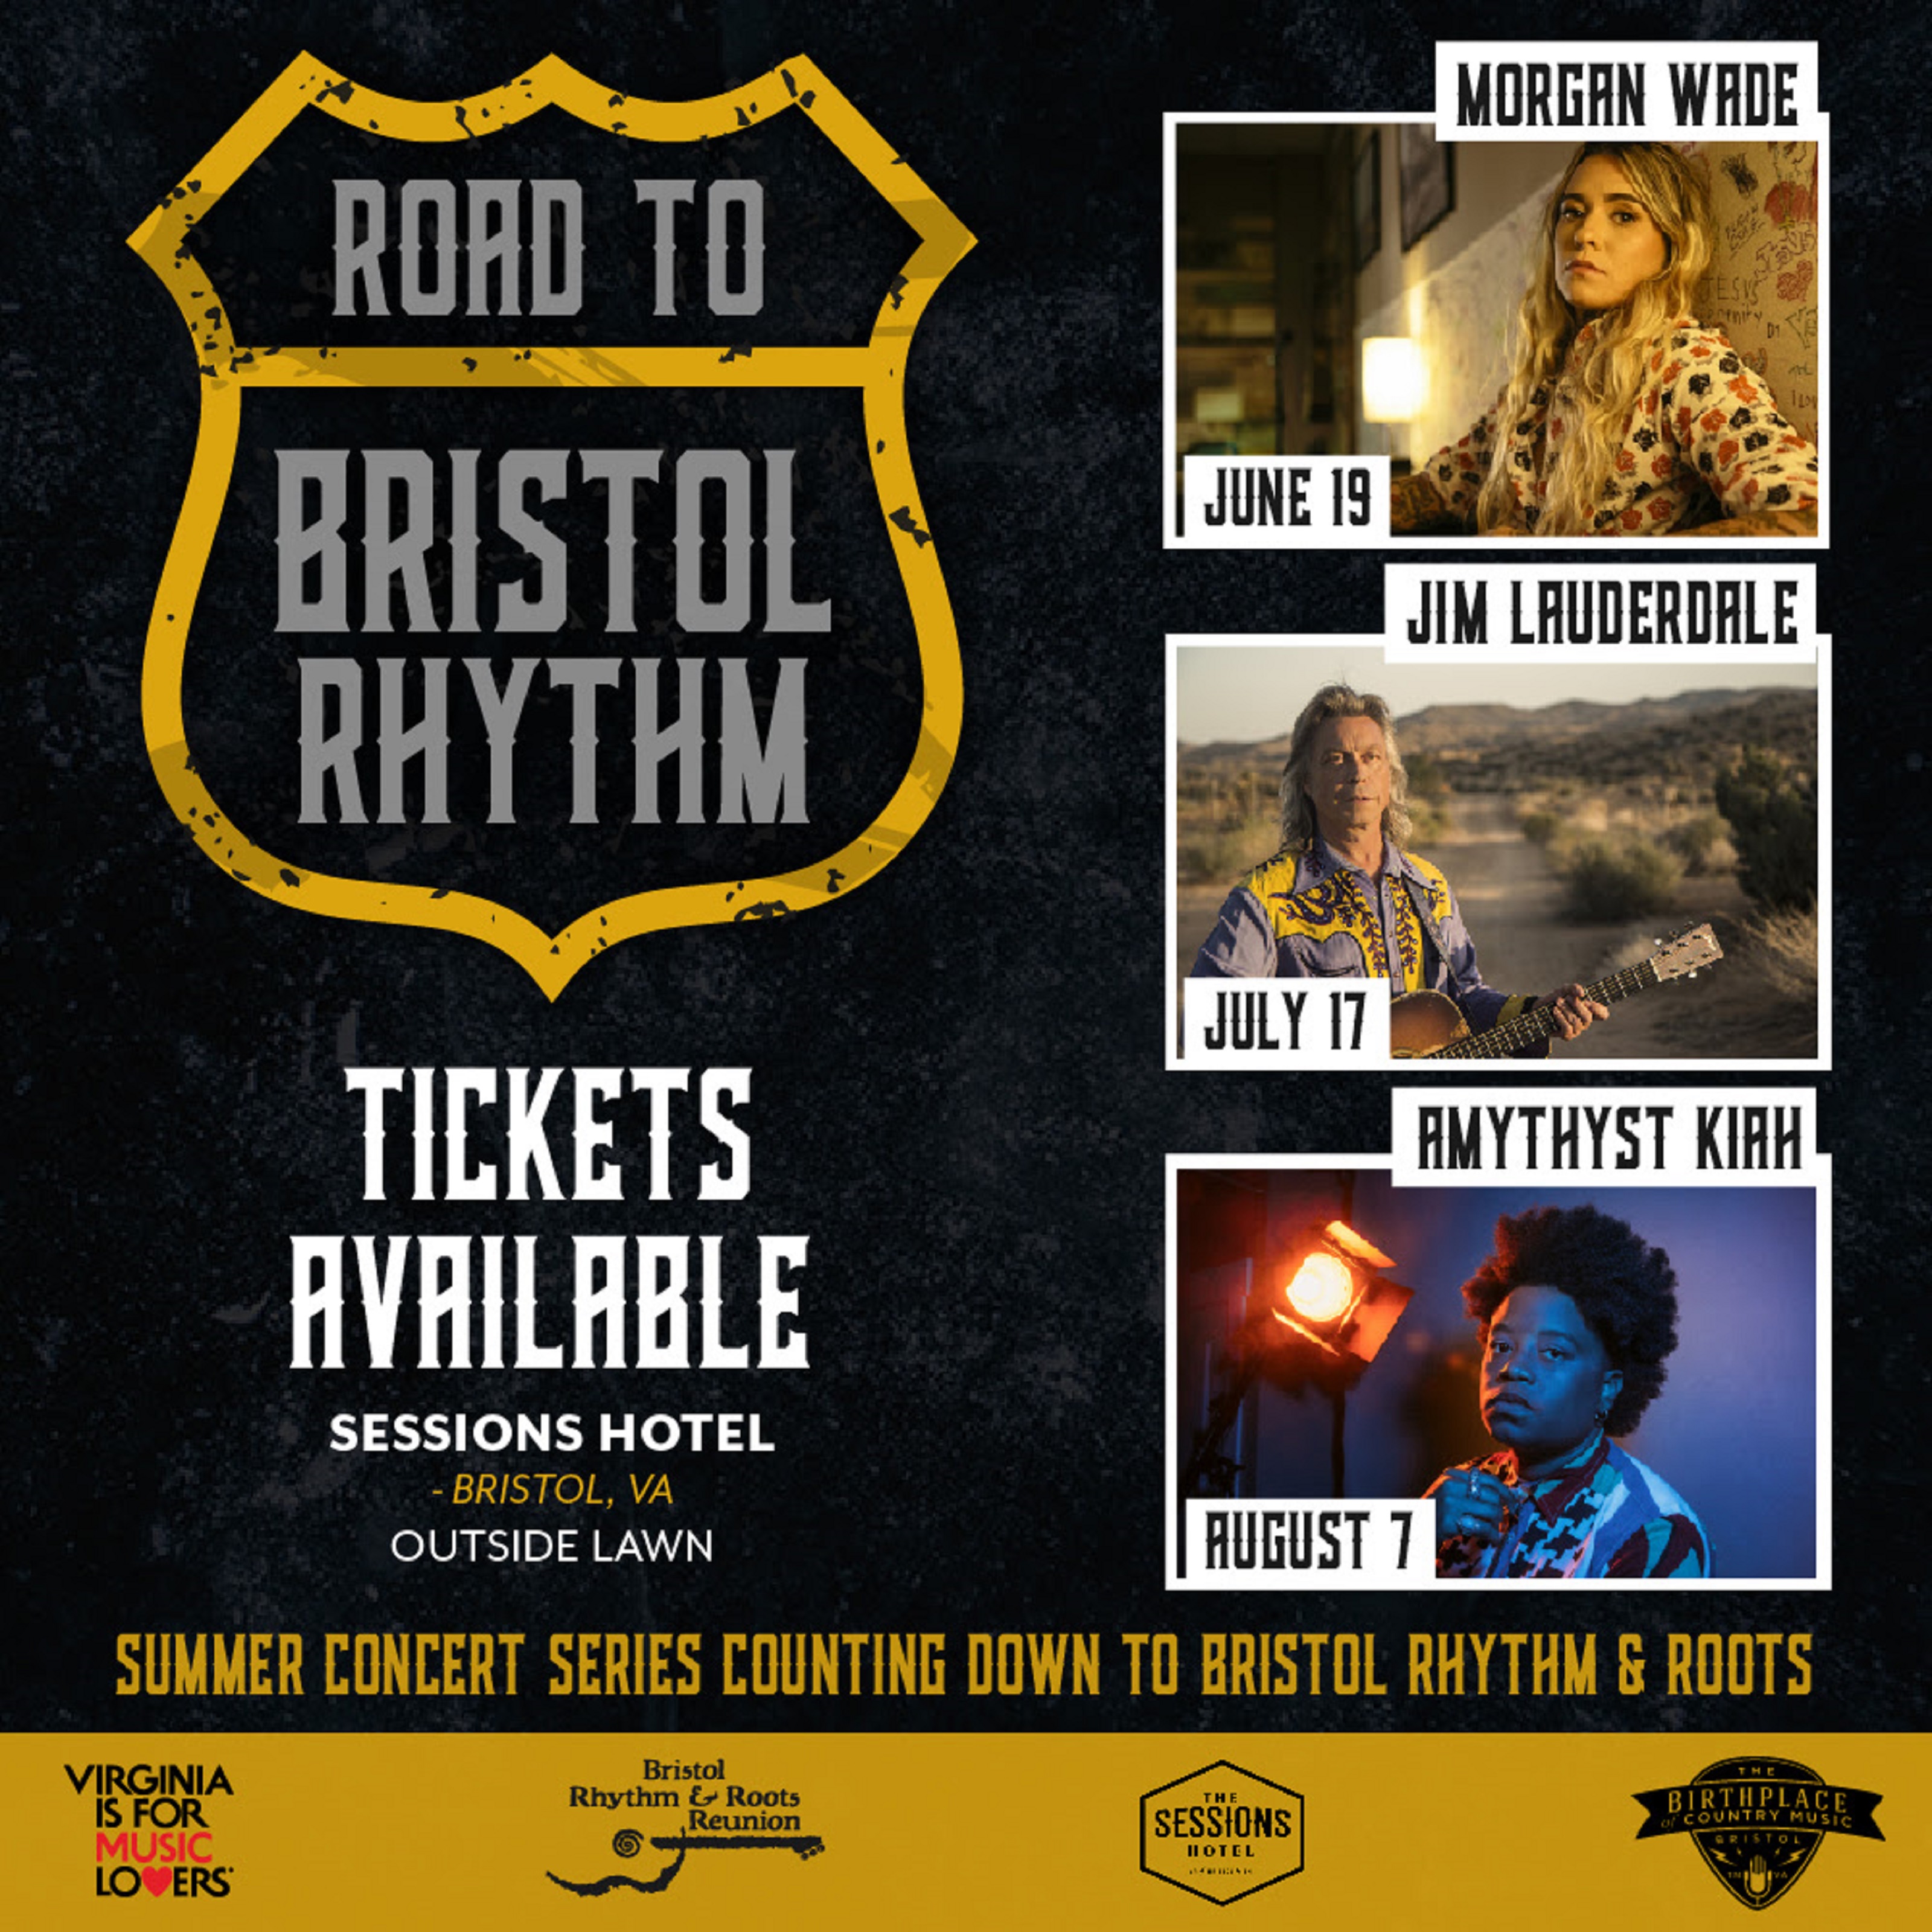 Road to Bristol Rhythm Concert Series Announced